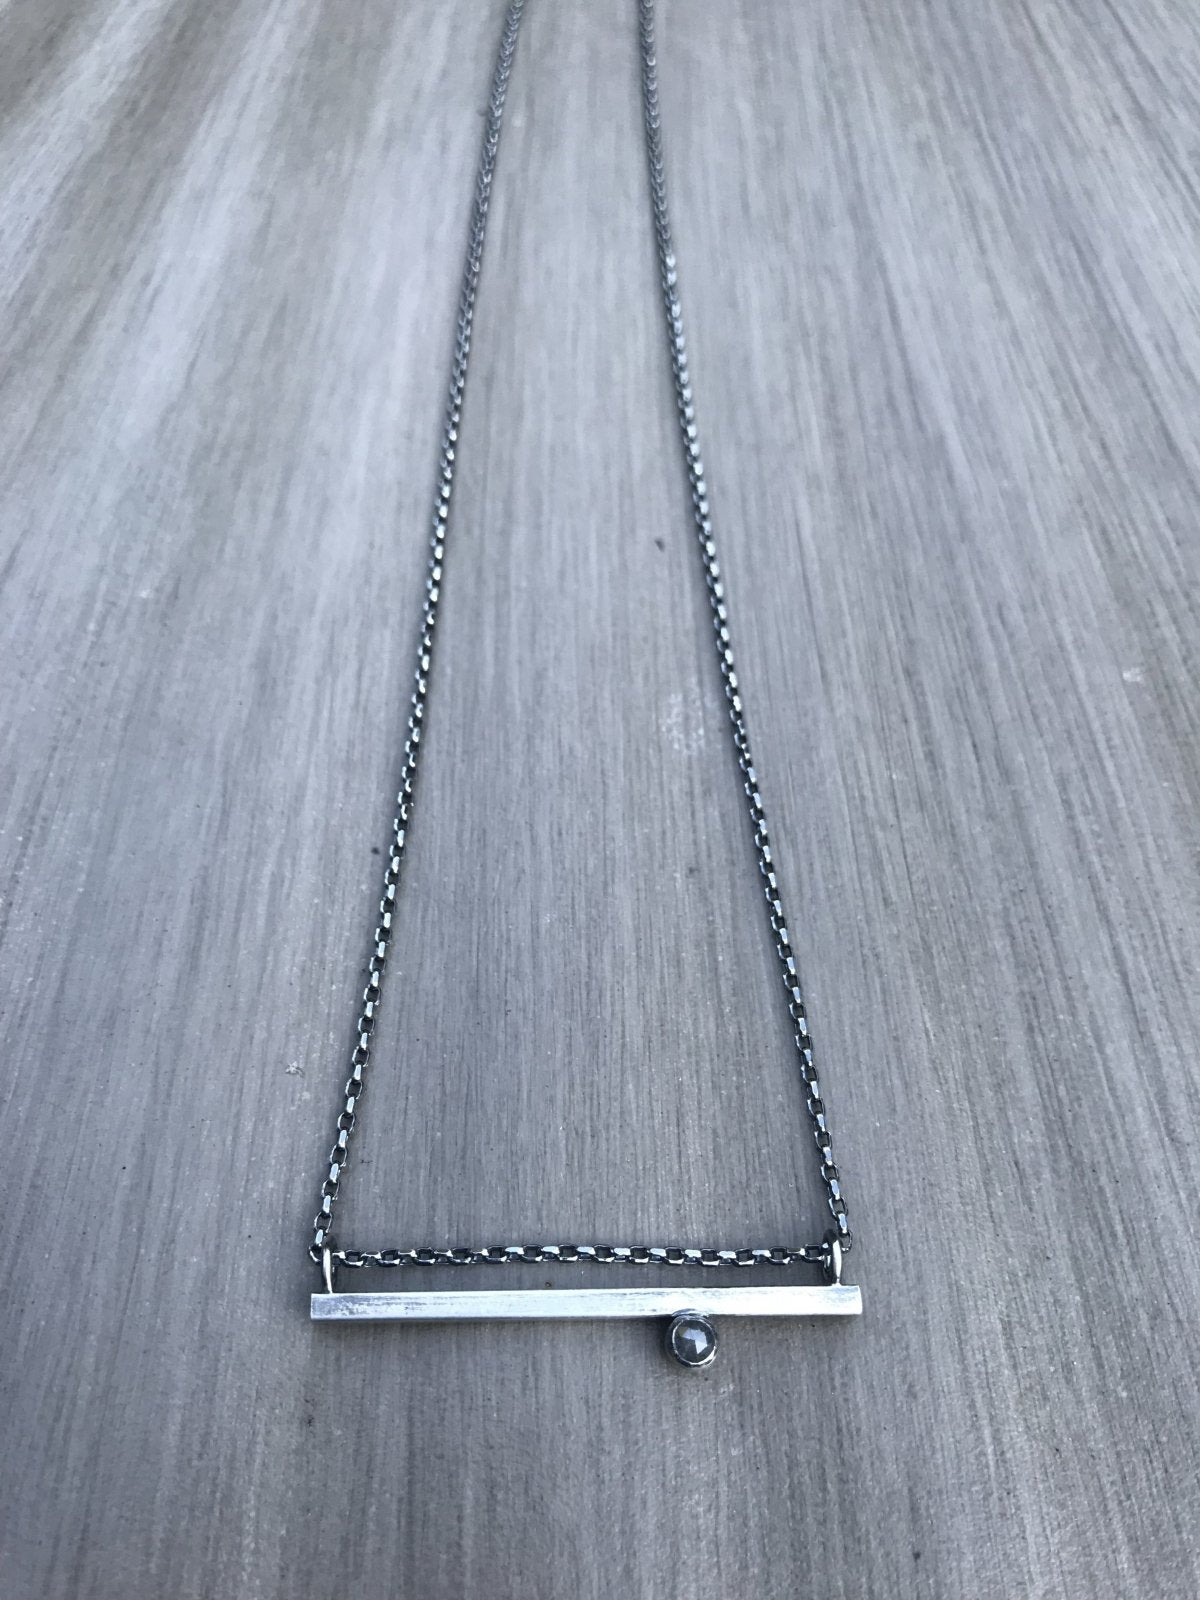 Natural Gray Diamond - Horizontal Bar Necklace - Diamond, Sterling Silver - Peterson MADE